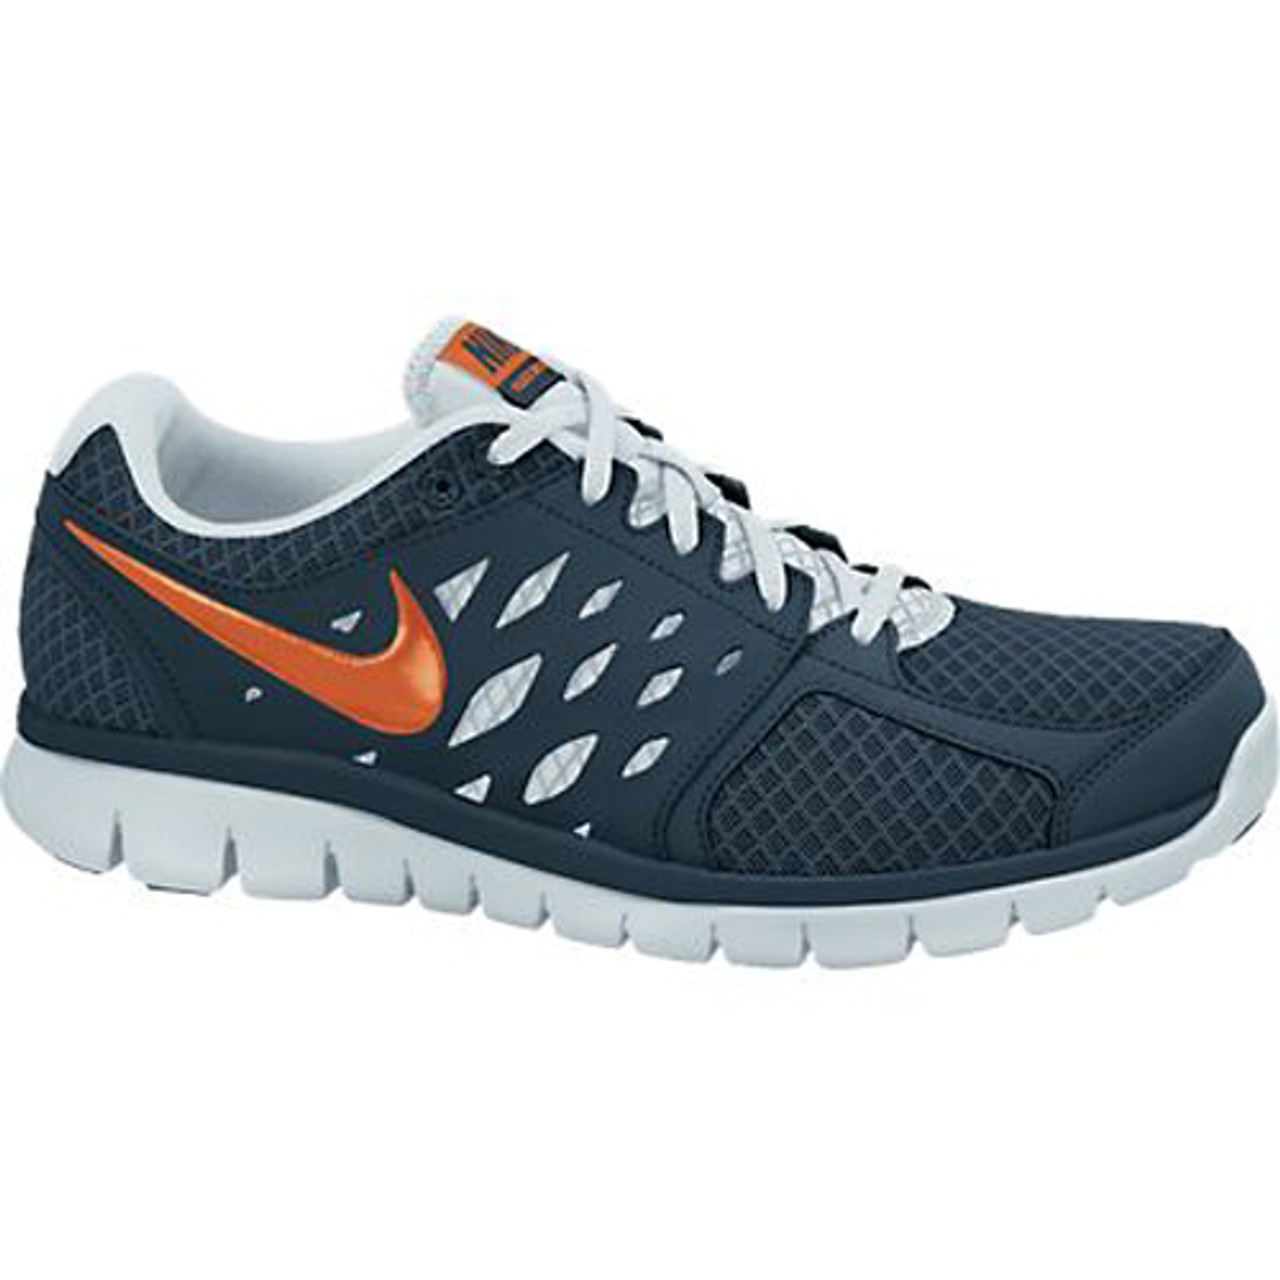 New Nike Flex 2013 Run Navy/Orange Mens Running Shoes - Armory Navy/Pure  Platinum/Urban Orange | Discount Nike Men's Athletic & More - Shoolu.com |  Shoolu.com